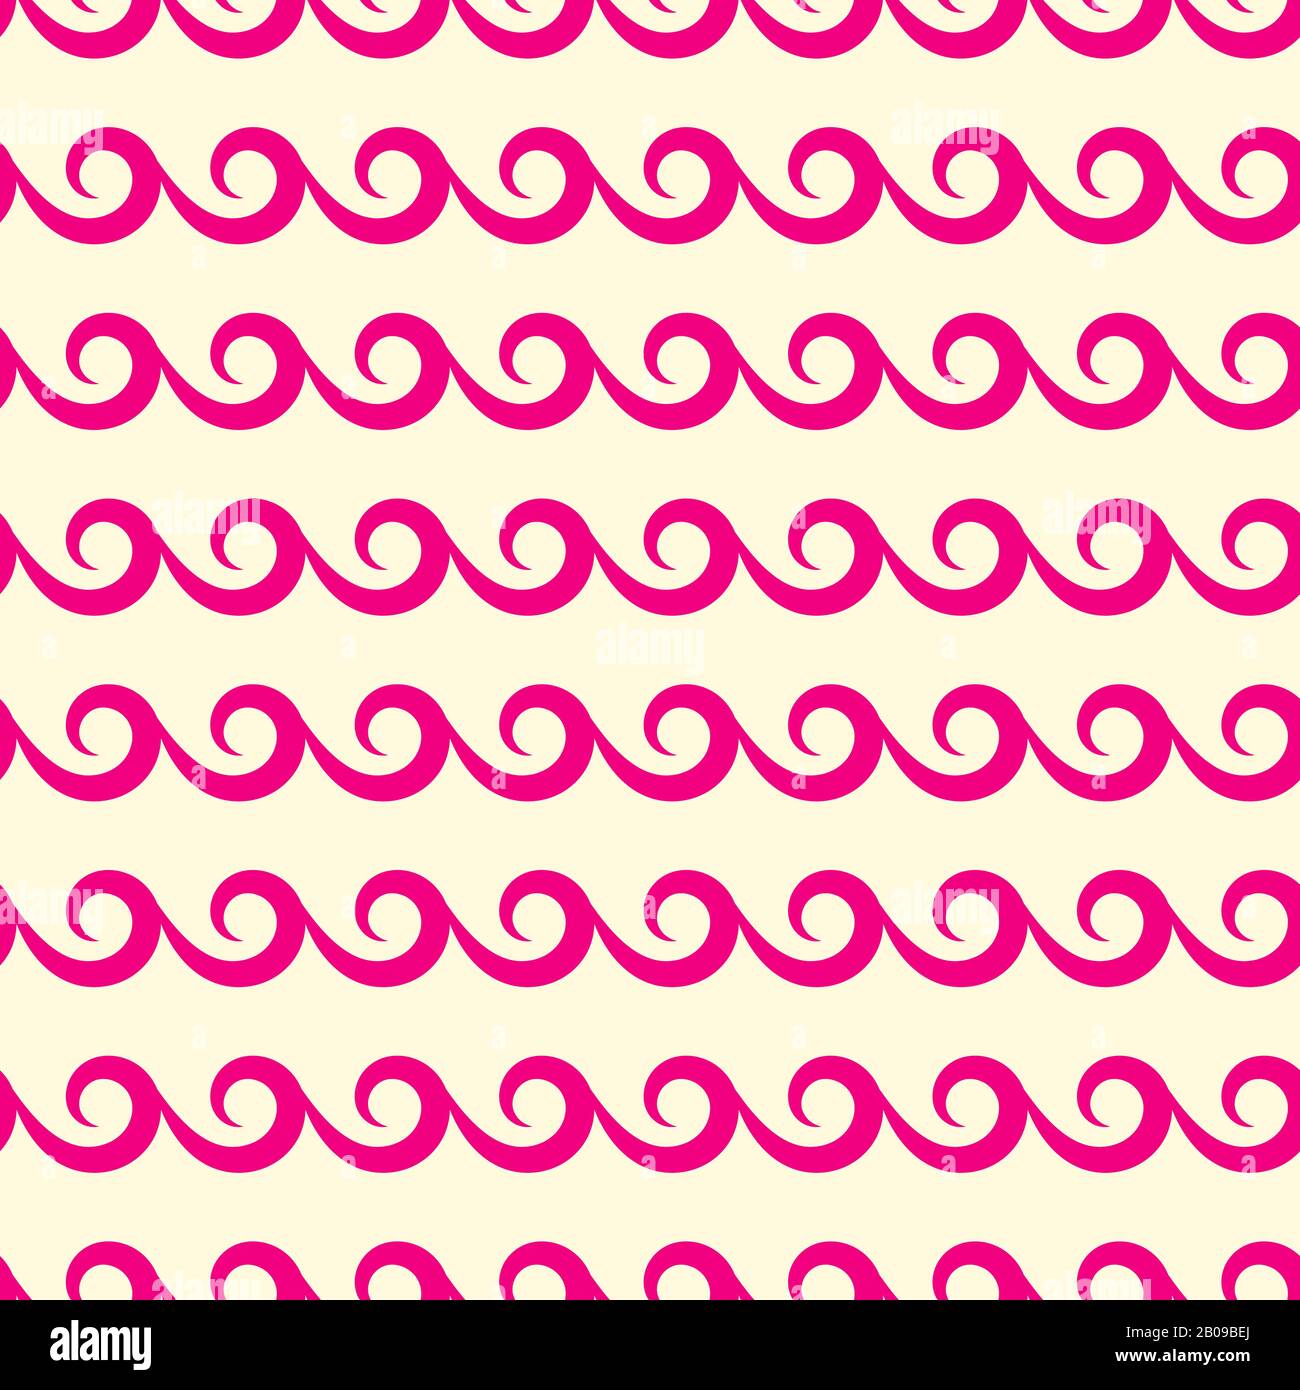 Der rosafarbene Vektor wirbelt ein nahtloses Muster. Kunst abstraktes Design Hintergrundillustration Stock Vektor